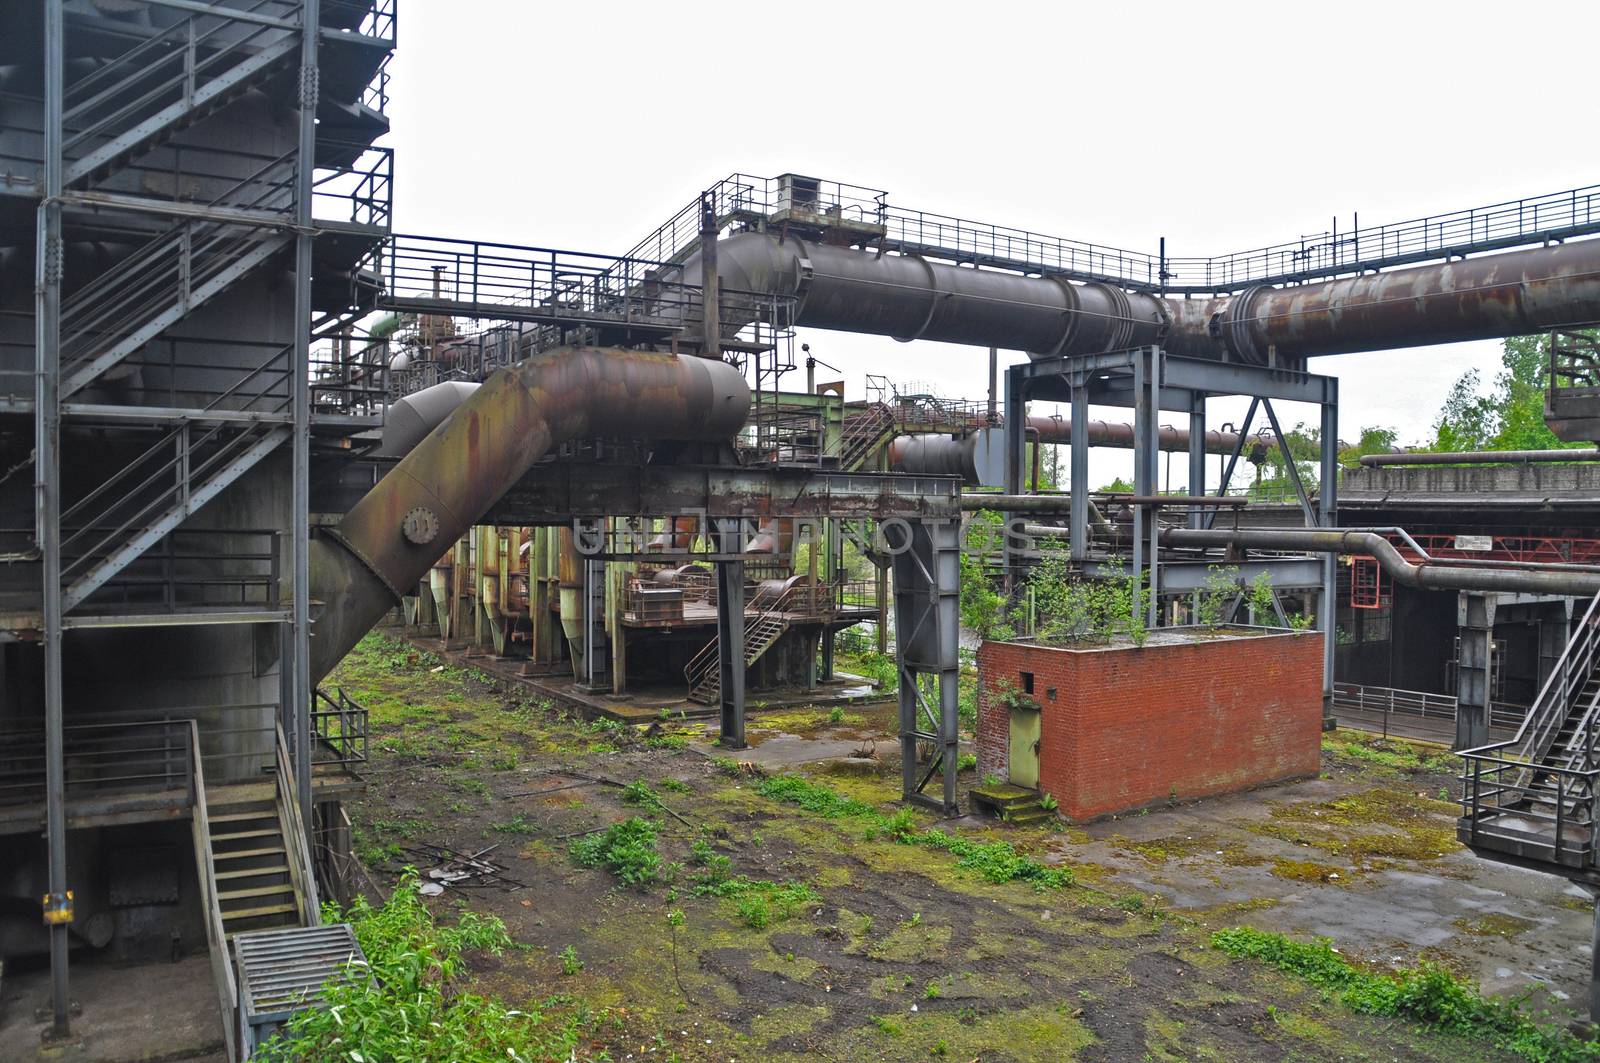 Former industry in Duisburg, Germany: Blast furnaces.